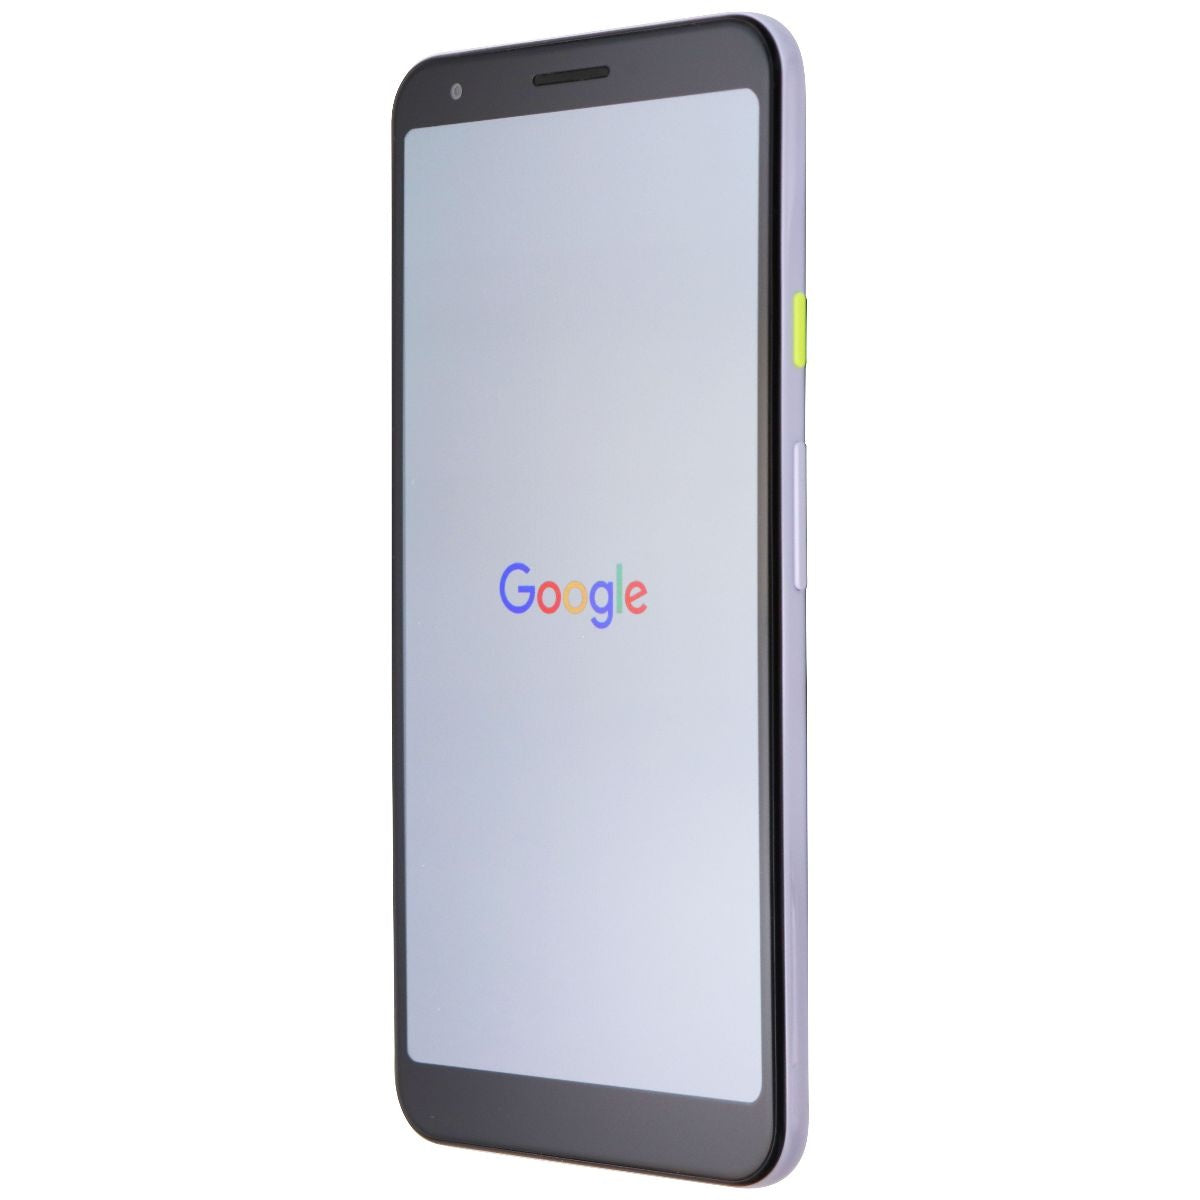 Google Pixel 3a XL Smartphone (G020A) GSM + CDMA - 64GB / Purple-ish